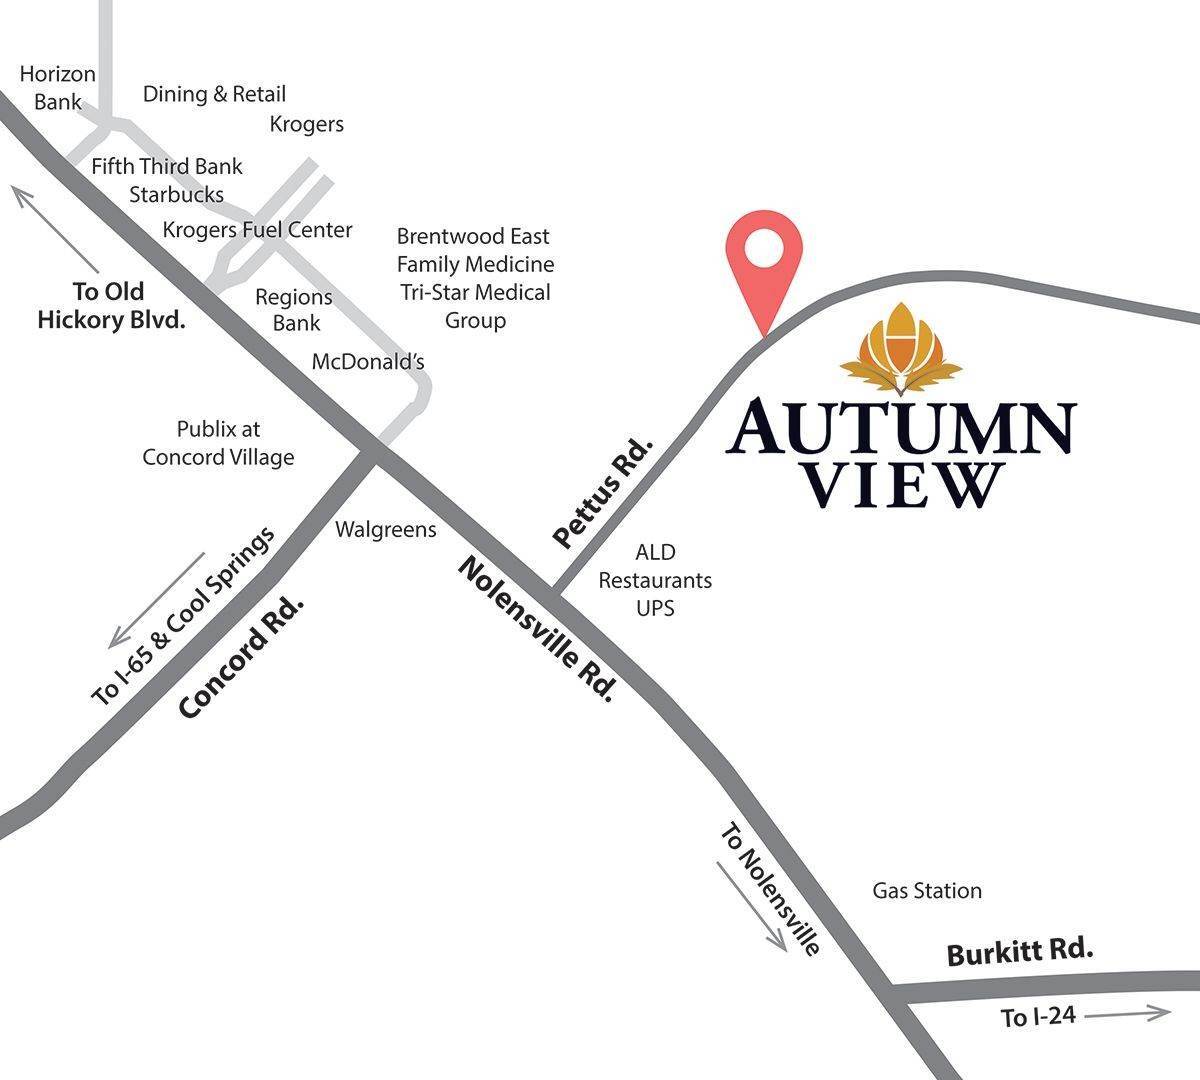 Autumn View建於 8100 Warbler Way, Brentwood, TN 37027